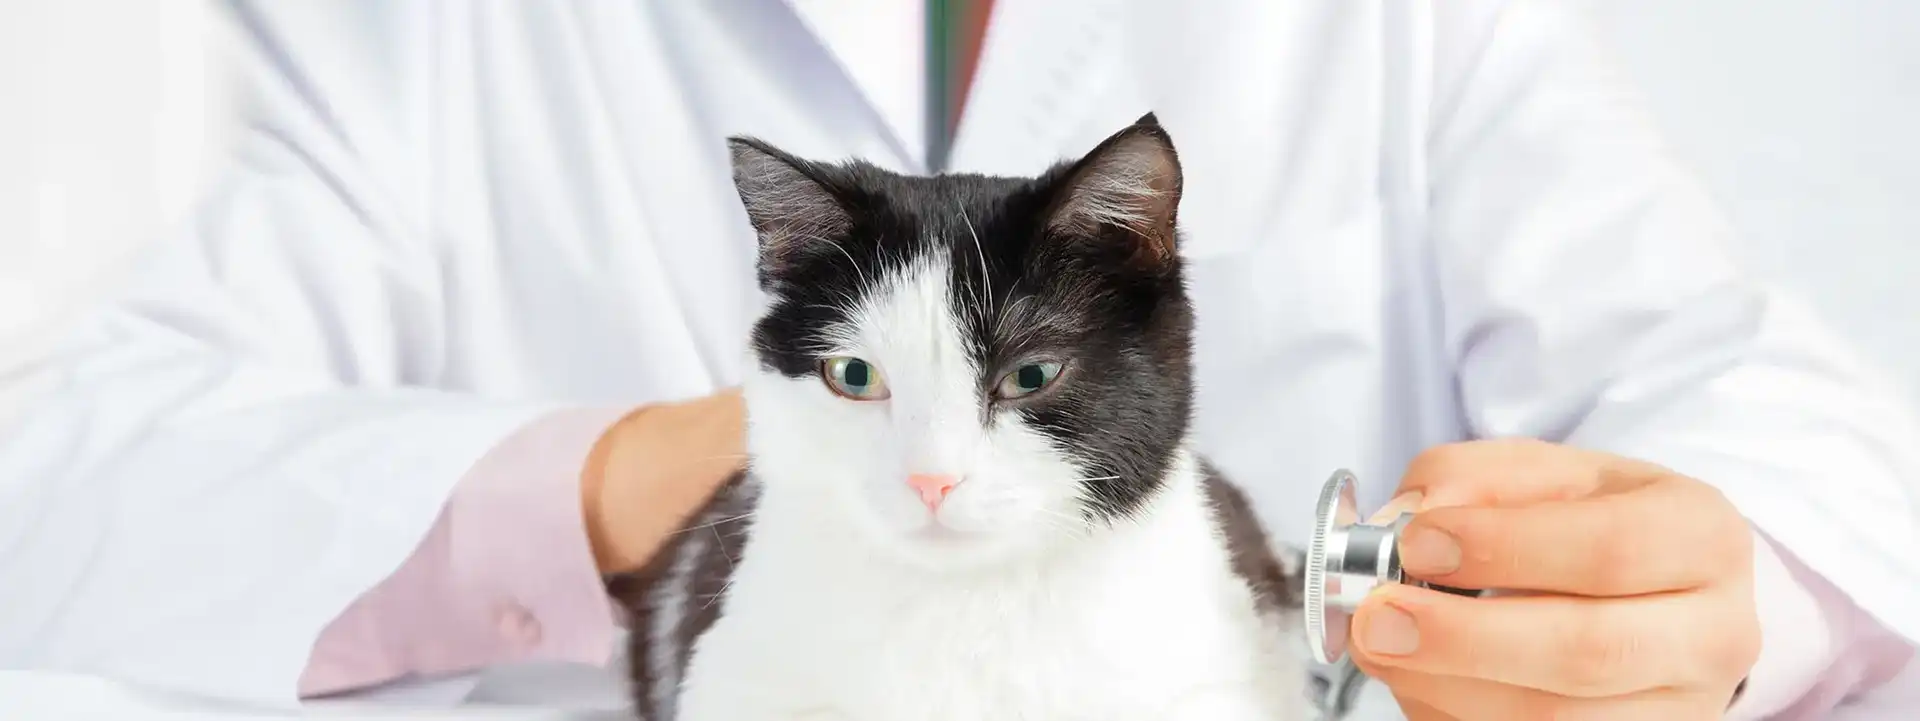 Black and white cat at the vet